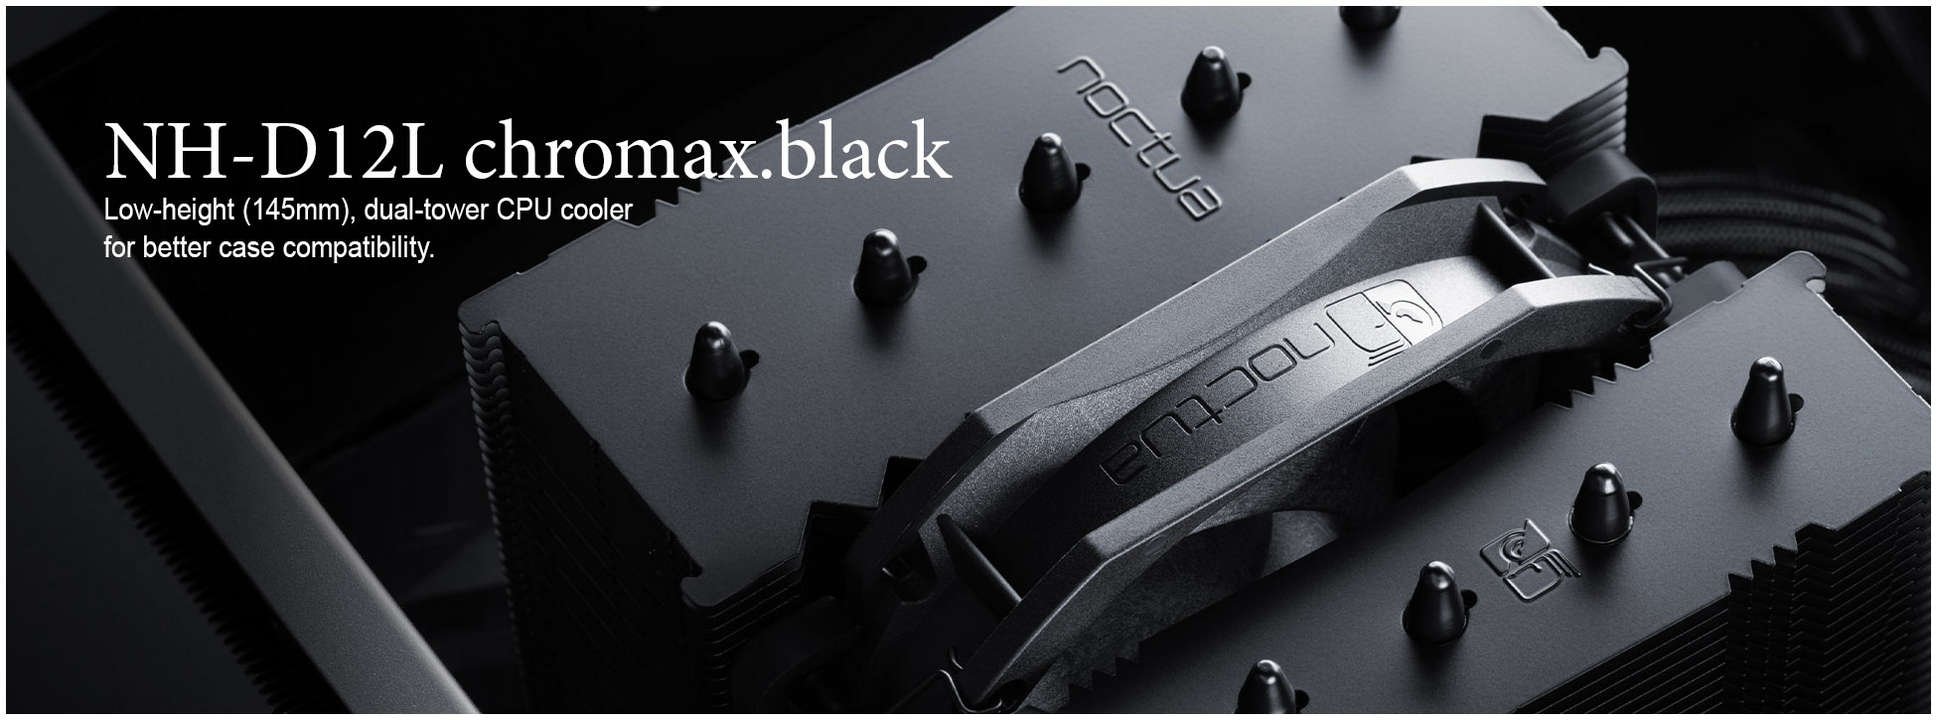 More information about "Noctua presents NH-D12L chromax.black CPU cooler"